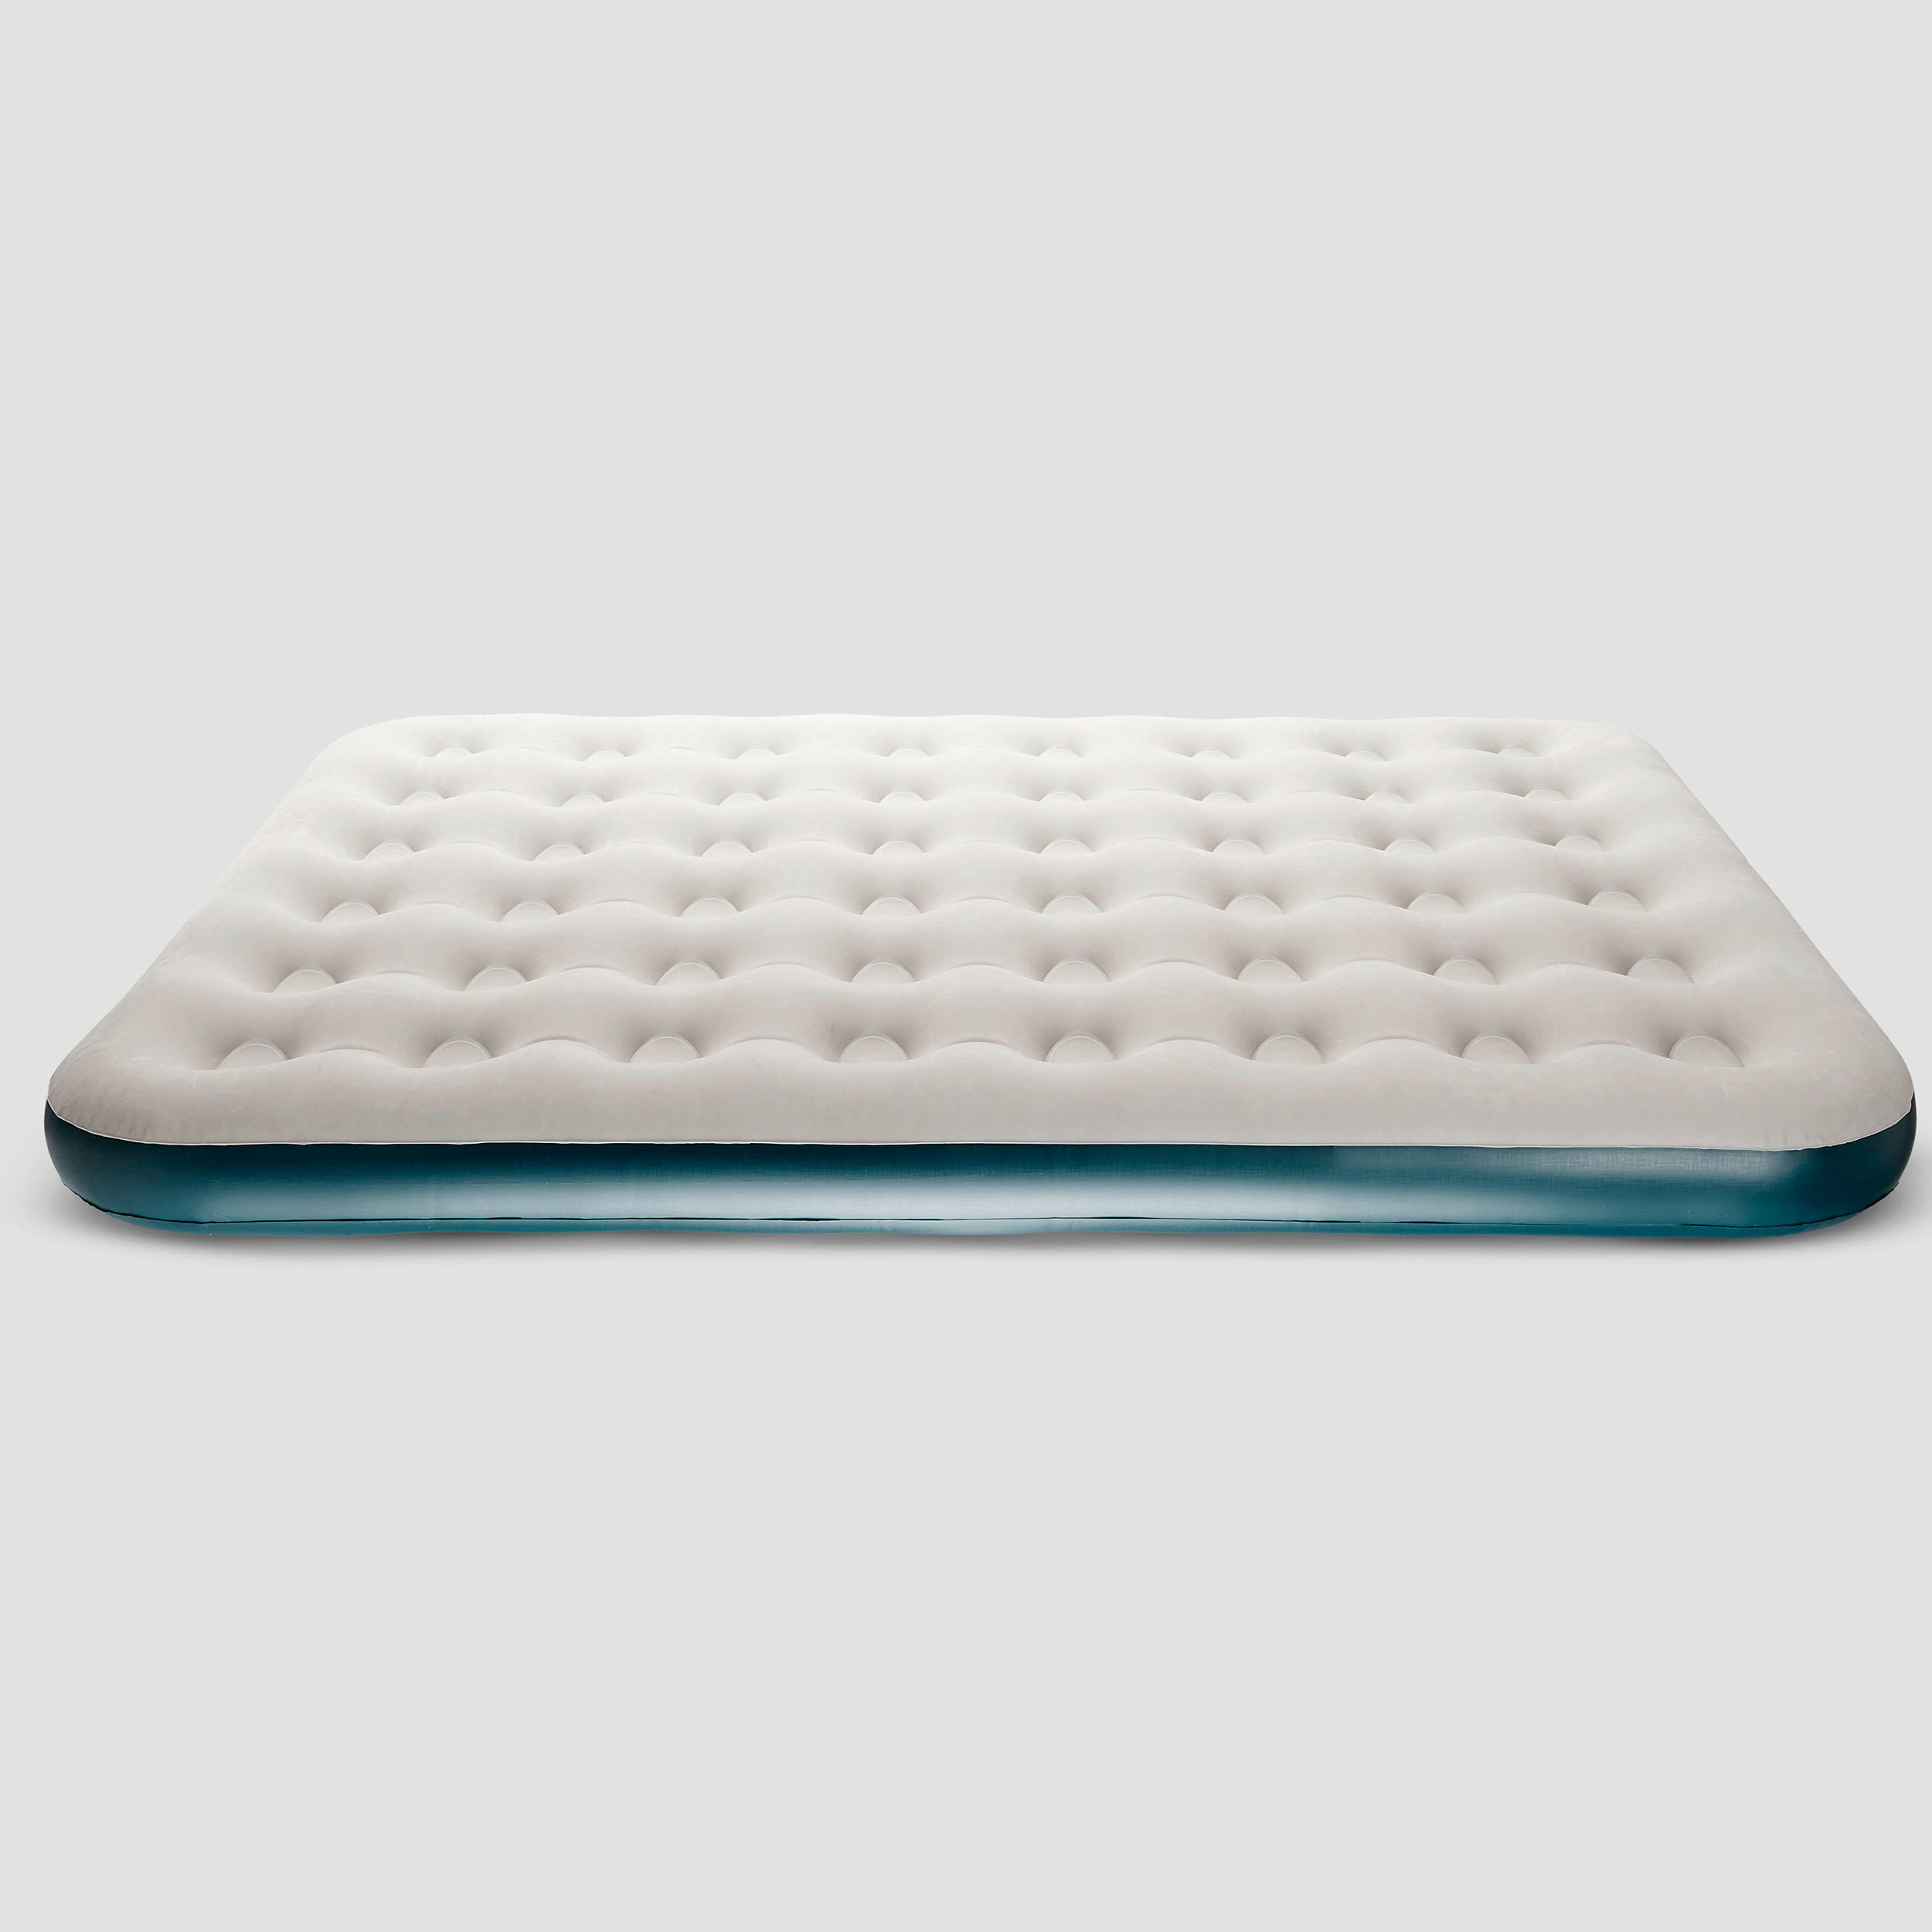 double camping mattress pad